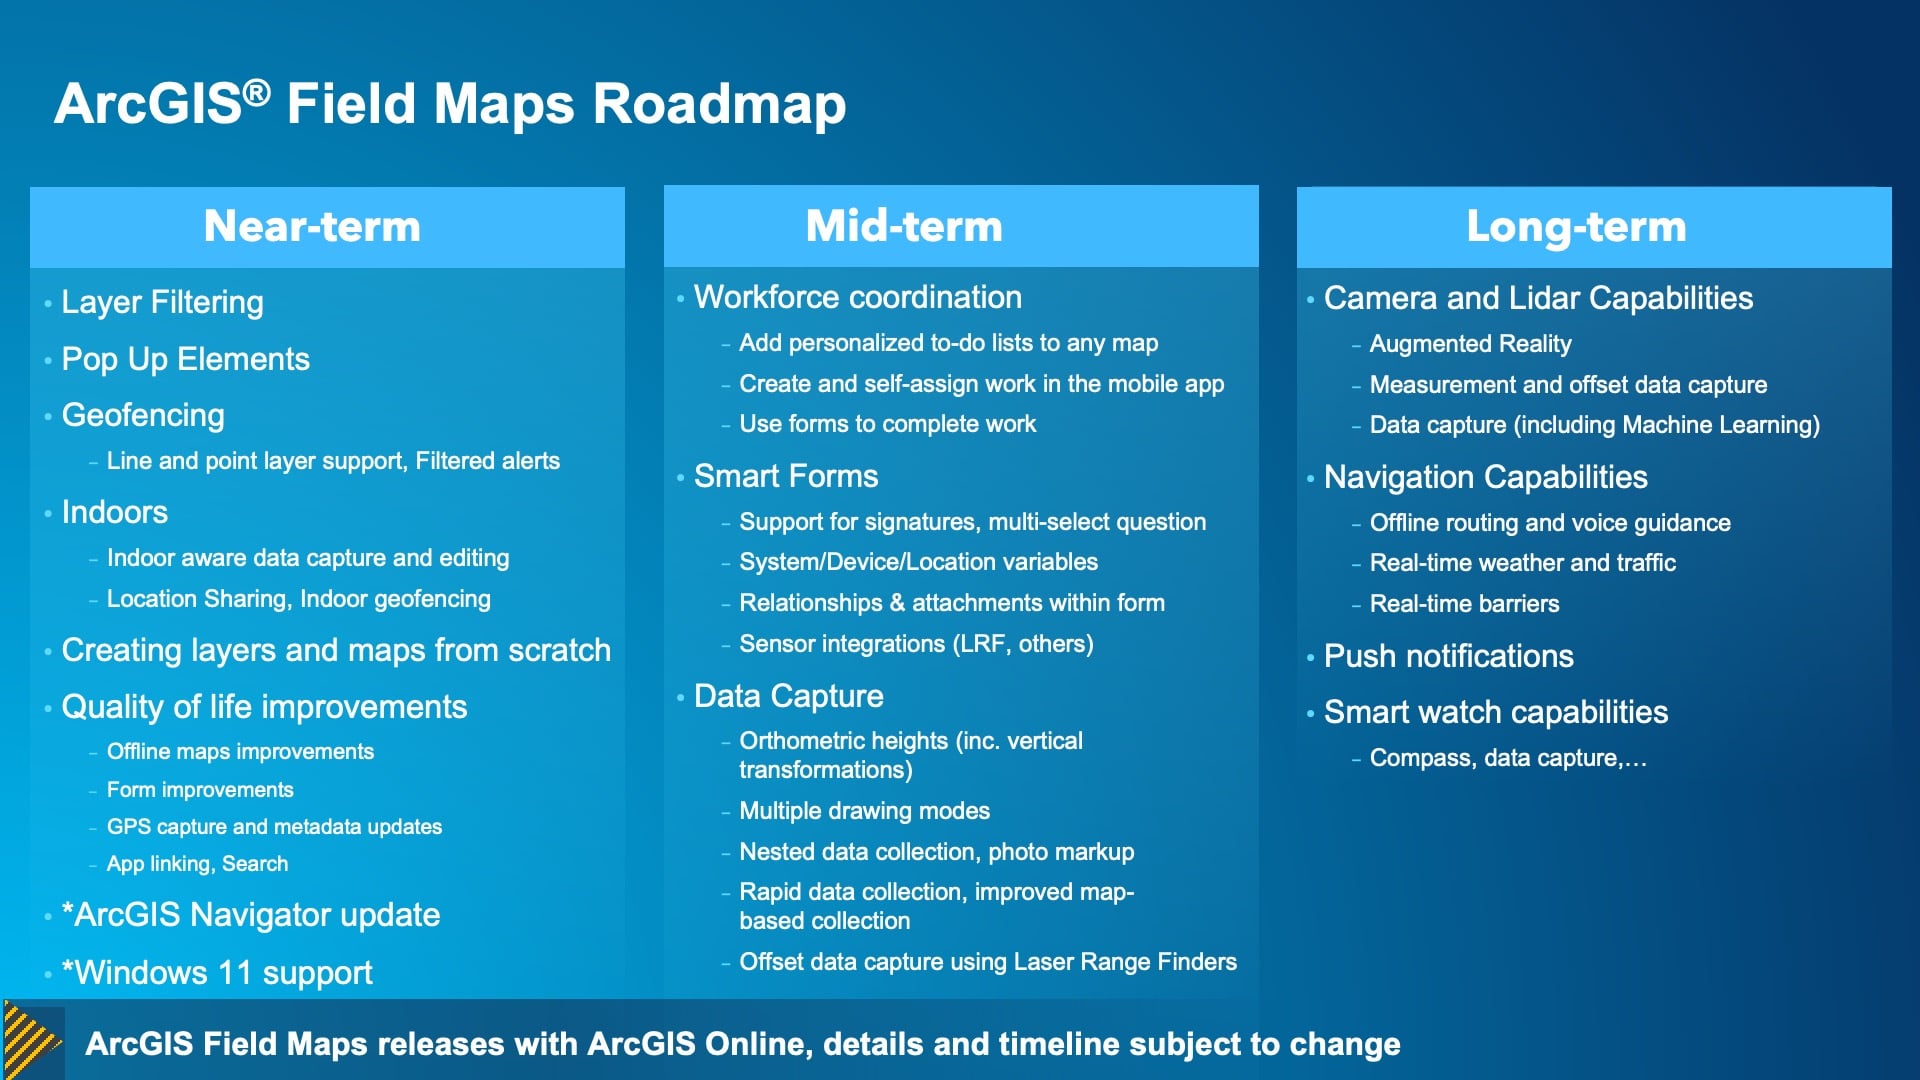 NRWA Eos Webinar: ArcGIS Field Maps Roadmap